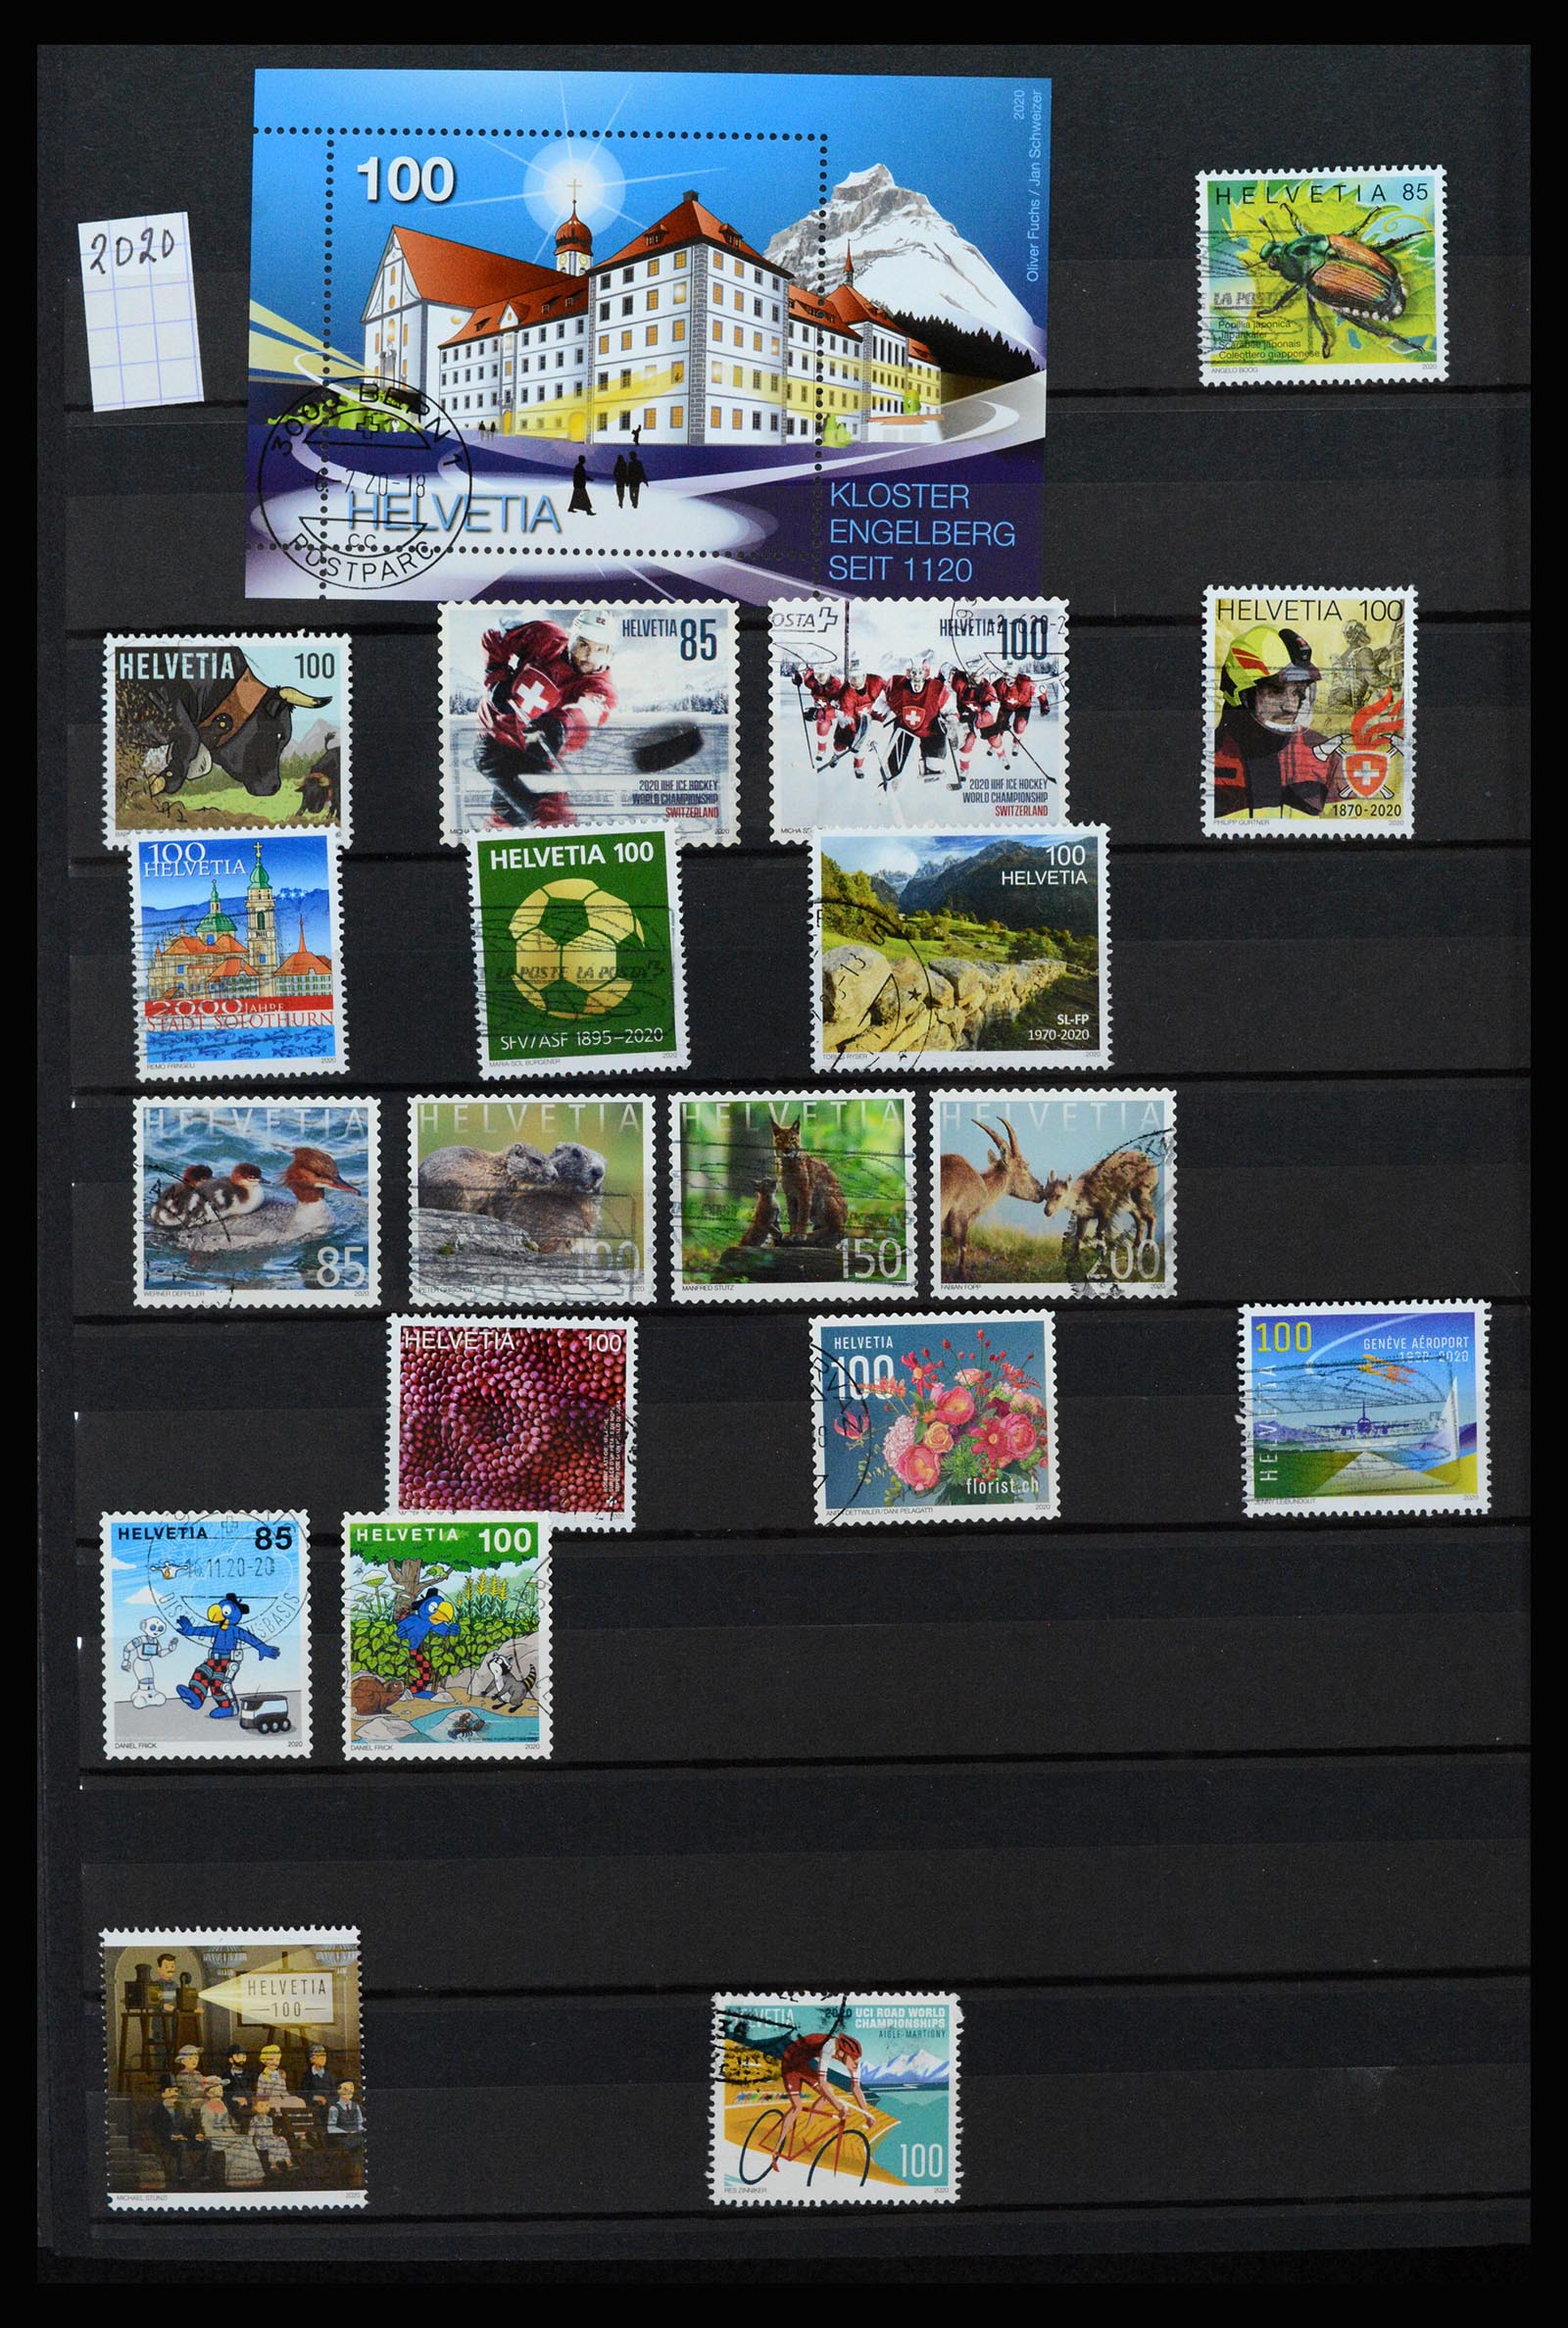 37225 196 - Stamp collection 37225 Switzerland 1854-2020.